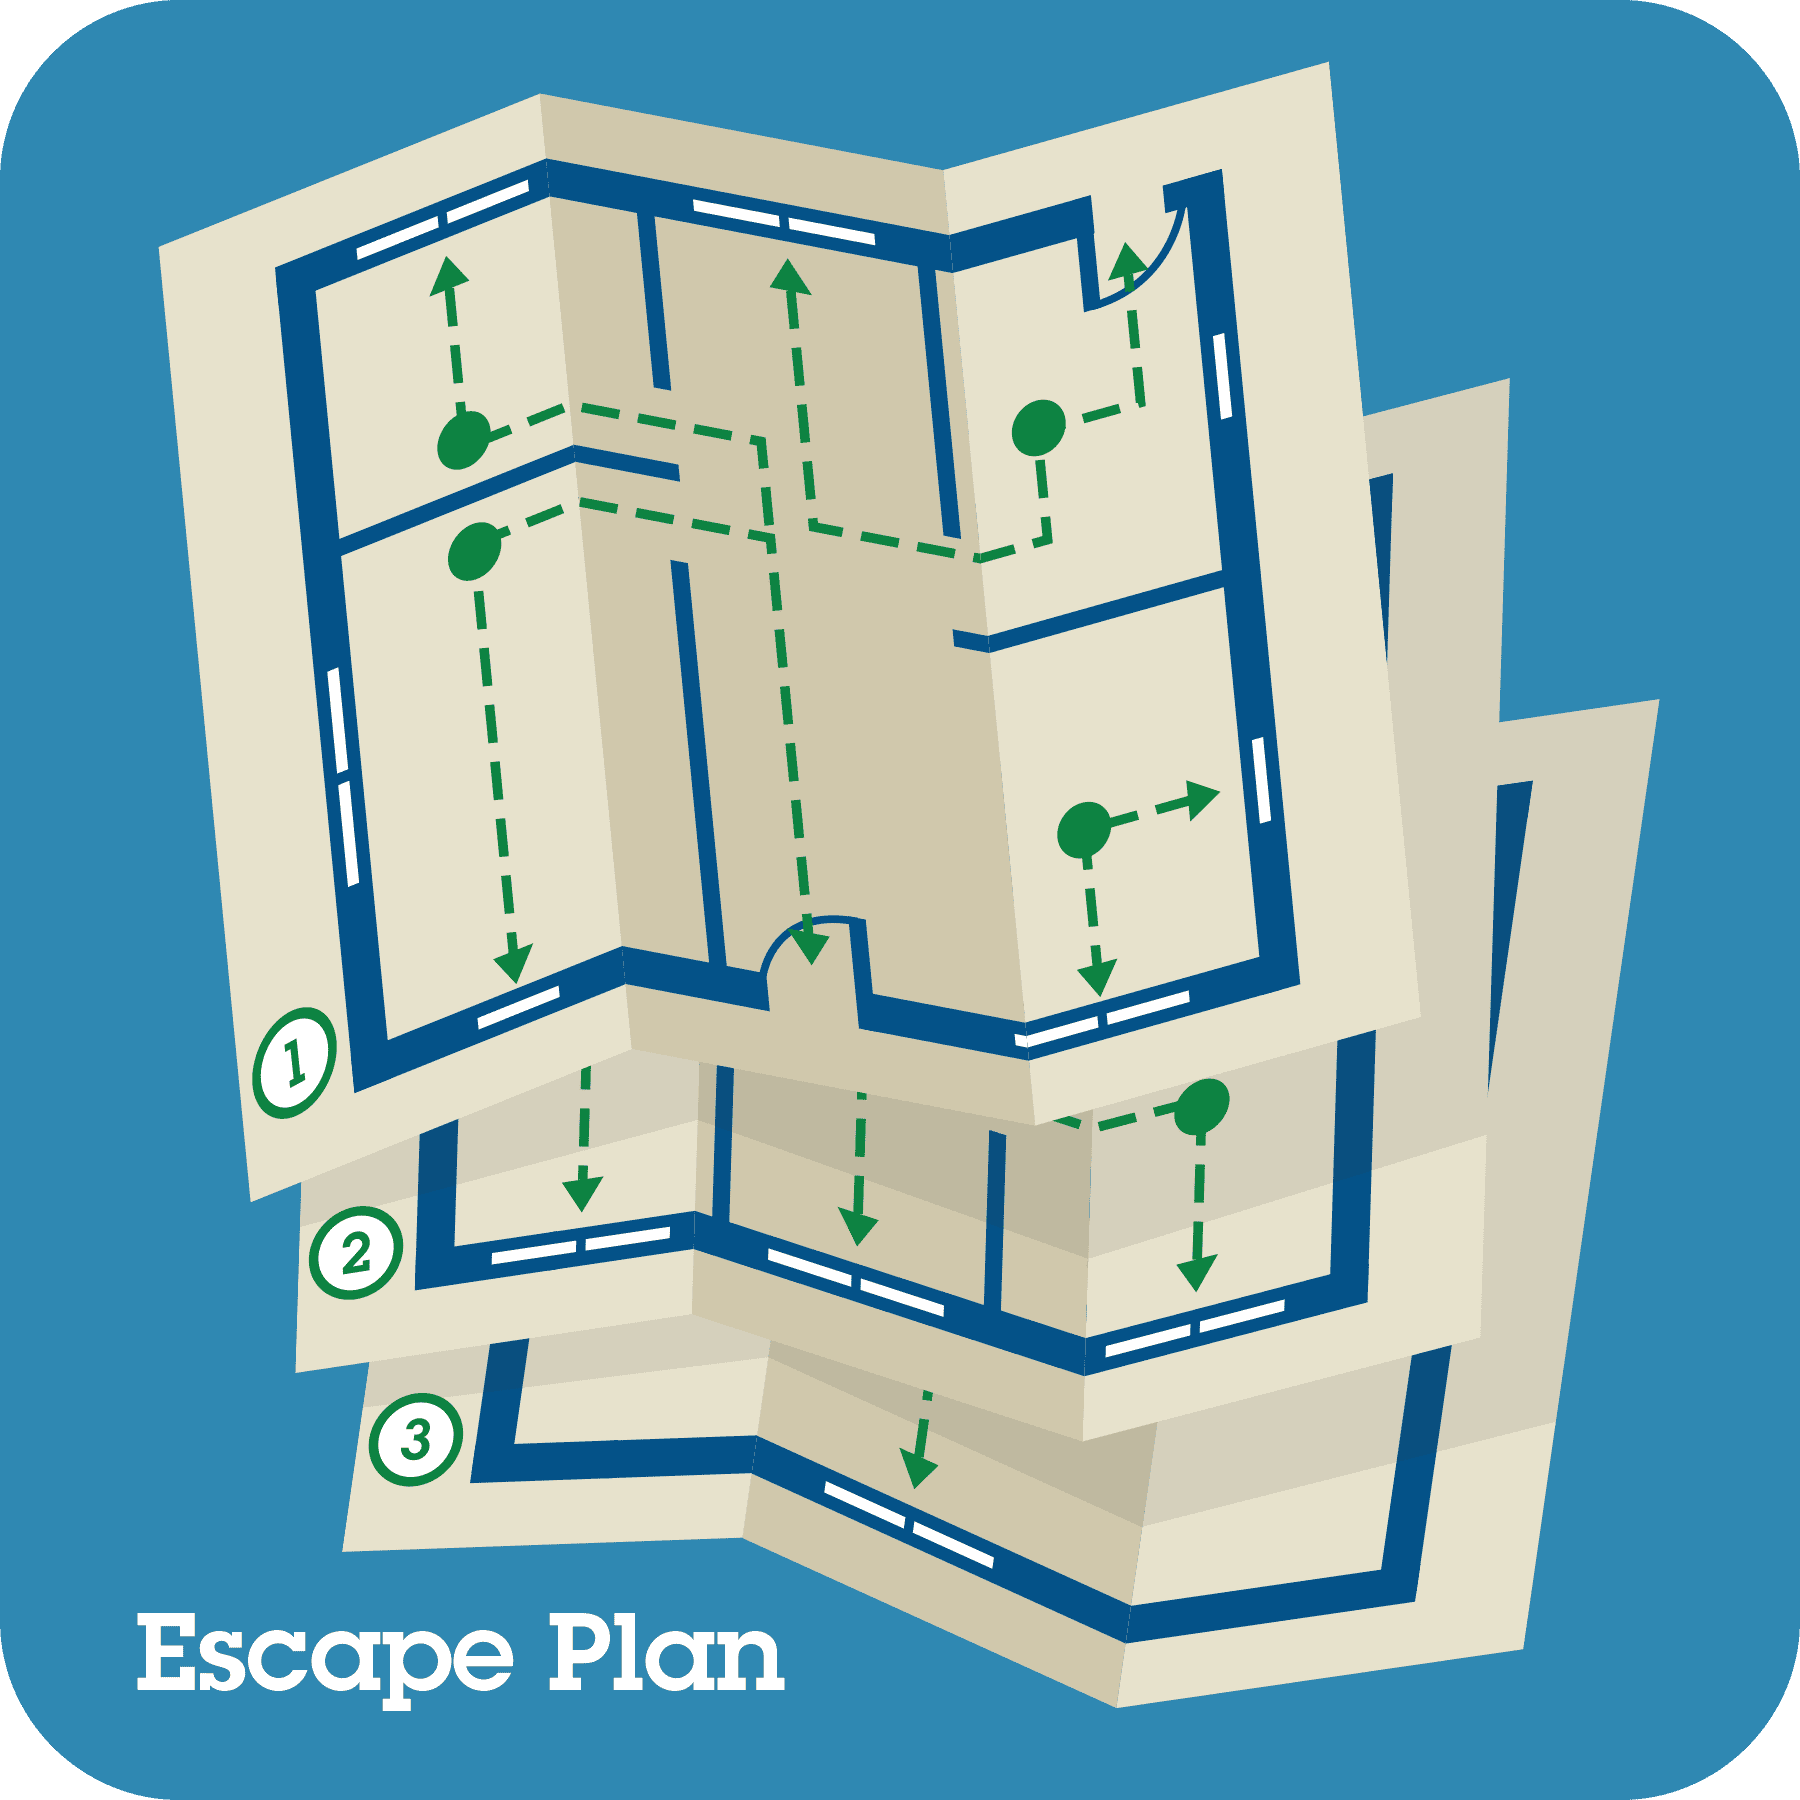 Fire escape plan diagrams for each home level.